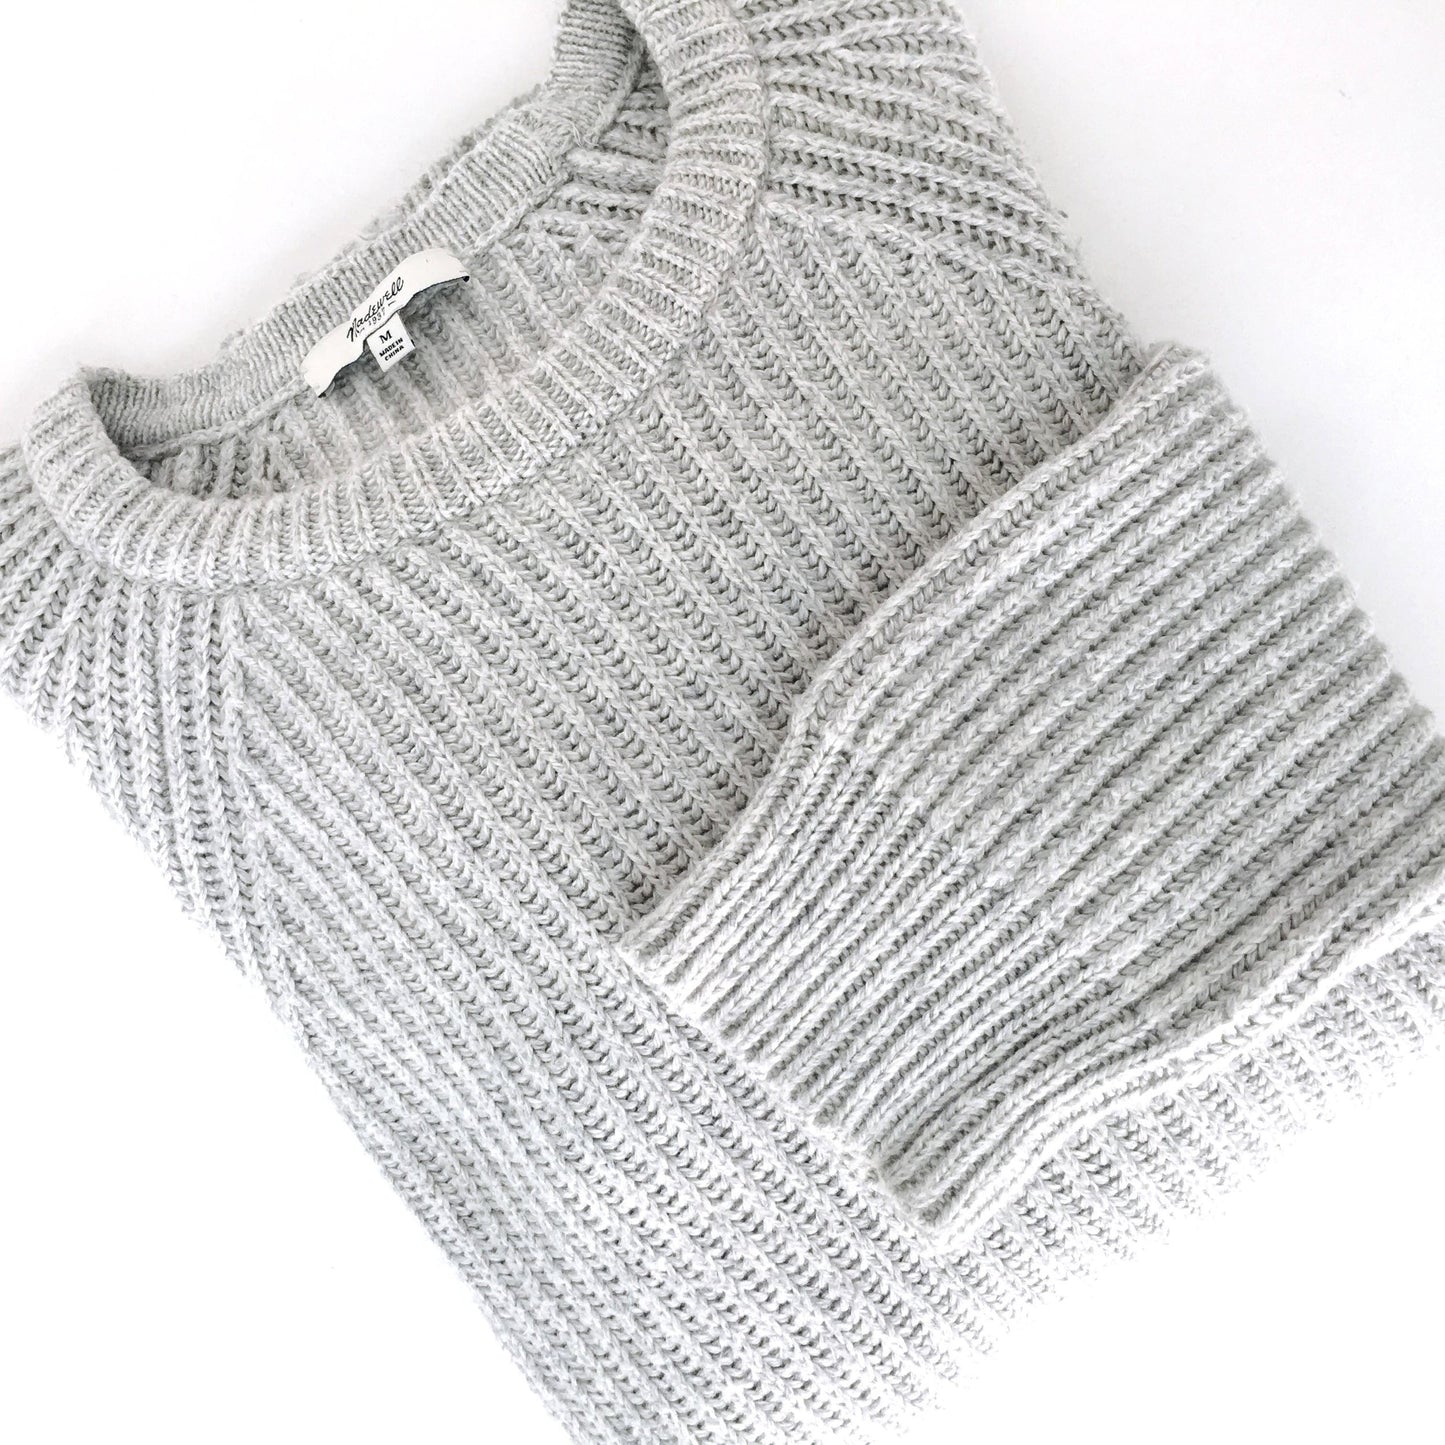 Madewell Tracklist Side Zipper Sweater - size Medium